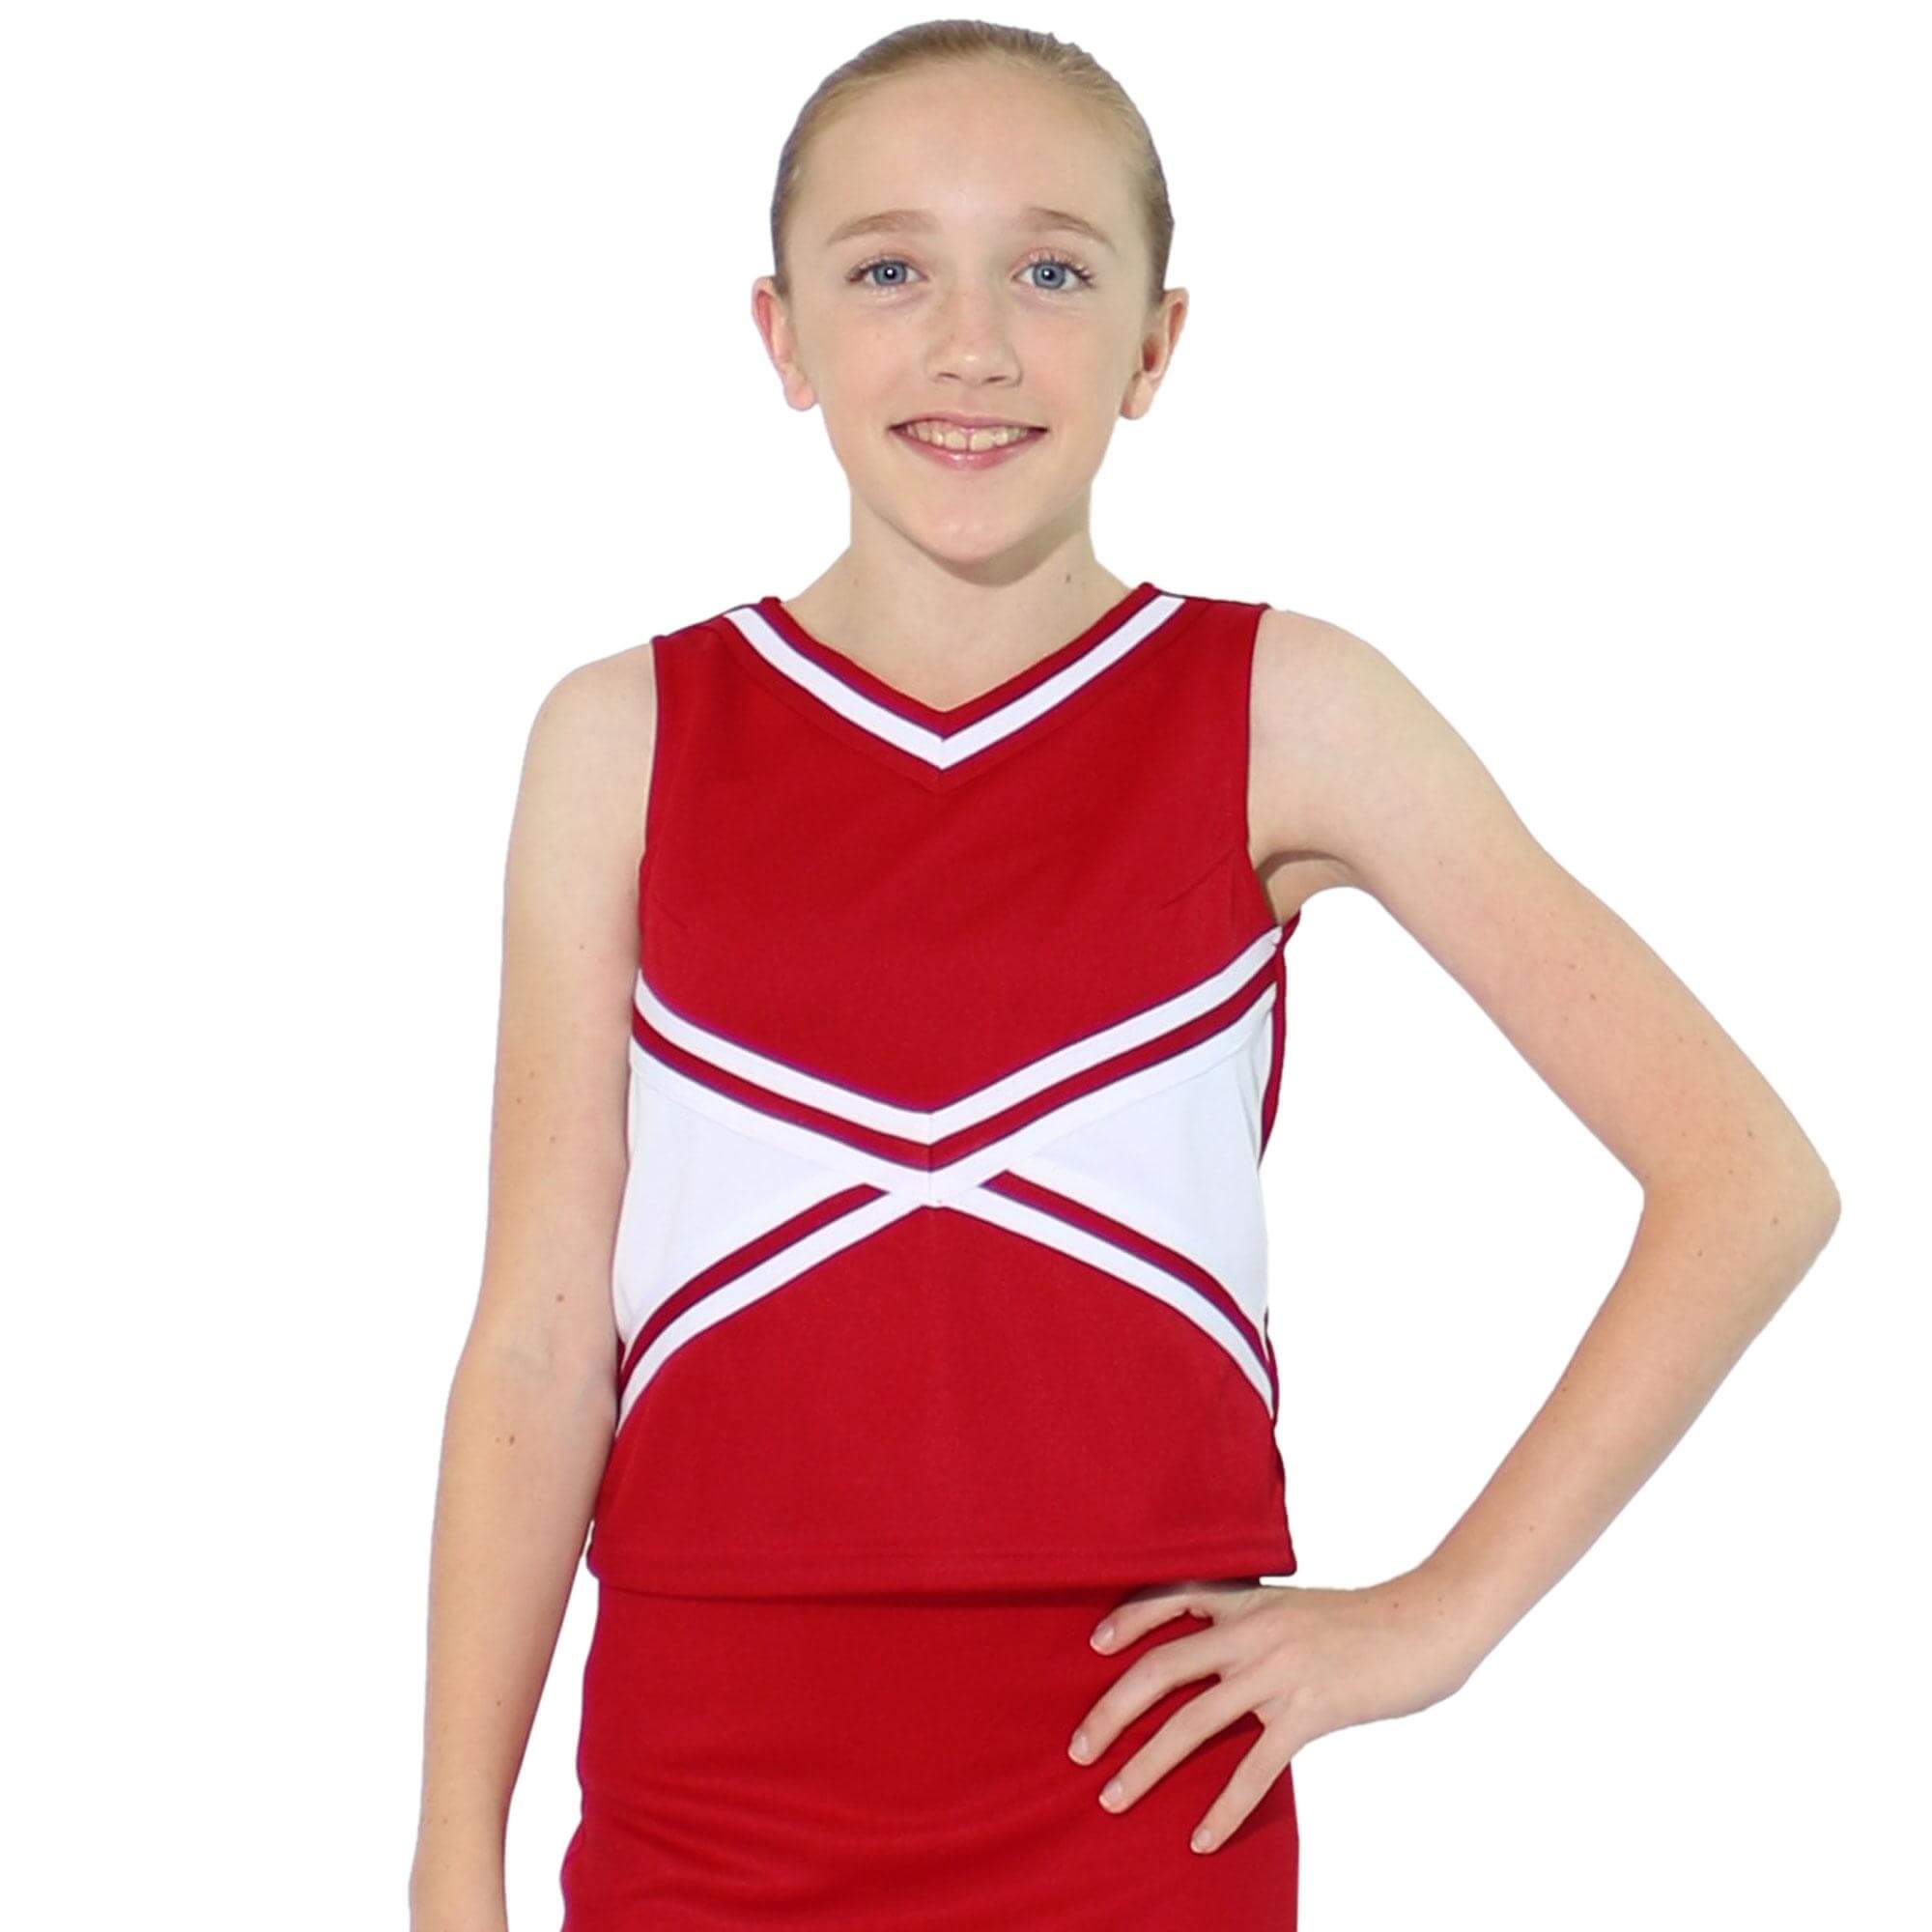 Danzcue Child 2-Color Kick Sweetheart Cheerleaders Uniform Shell Top - Click Image to Close